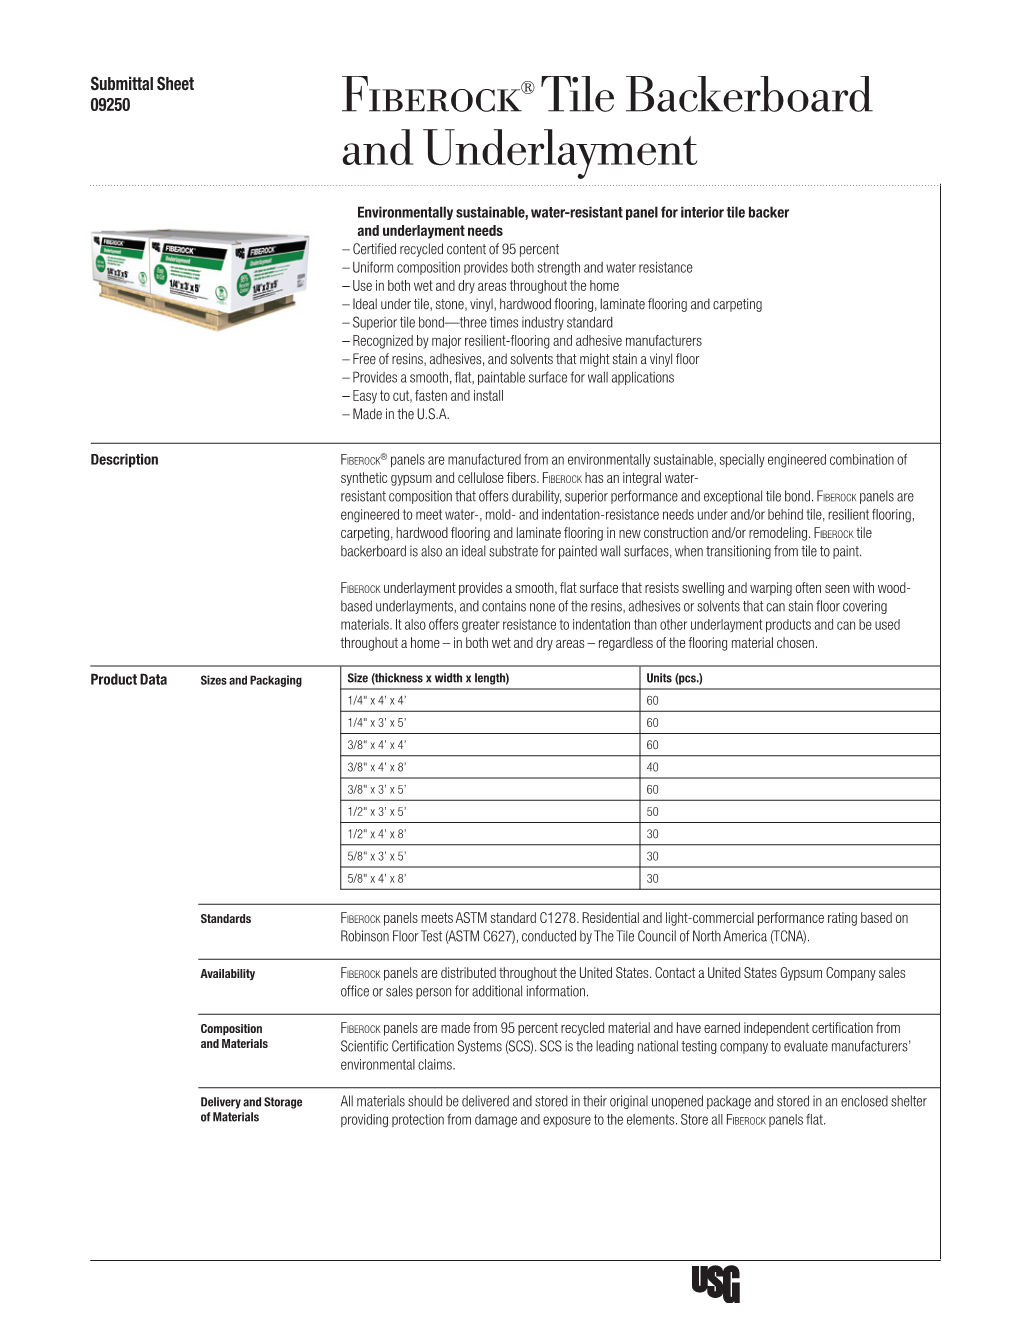 Fiberock® Tile Backerboard and Underlayment